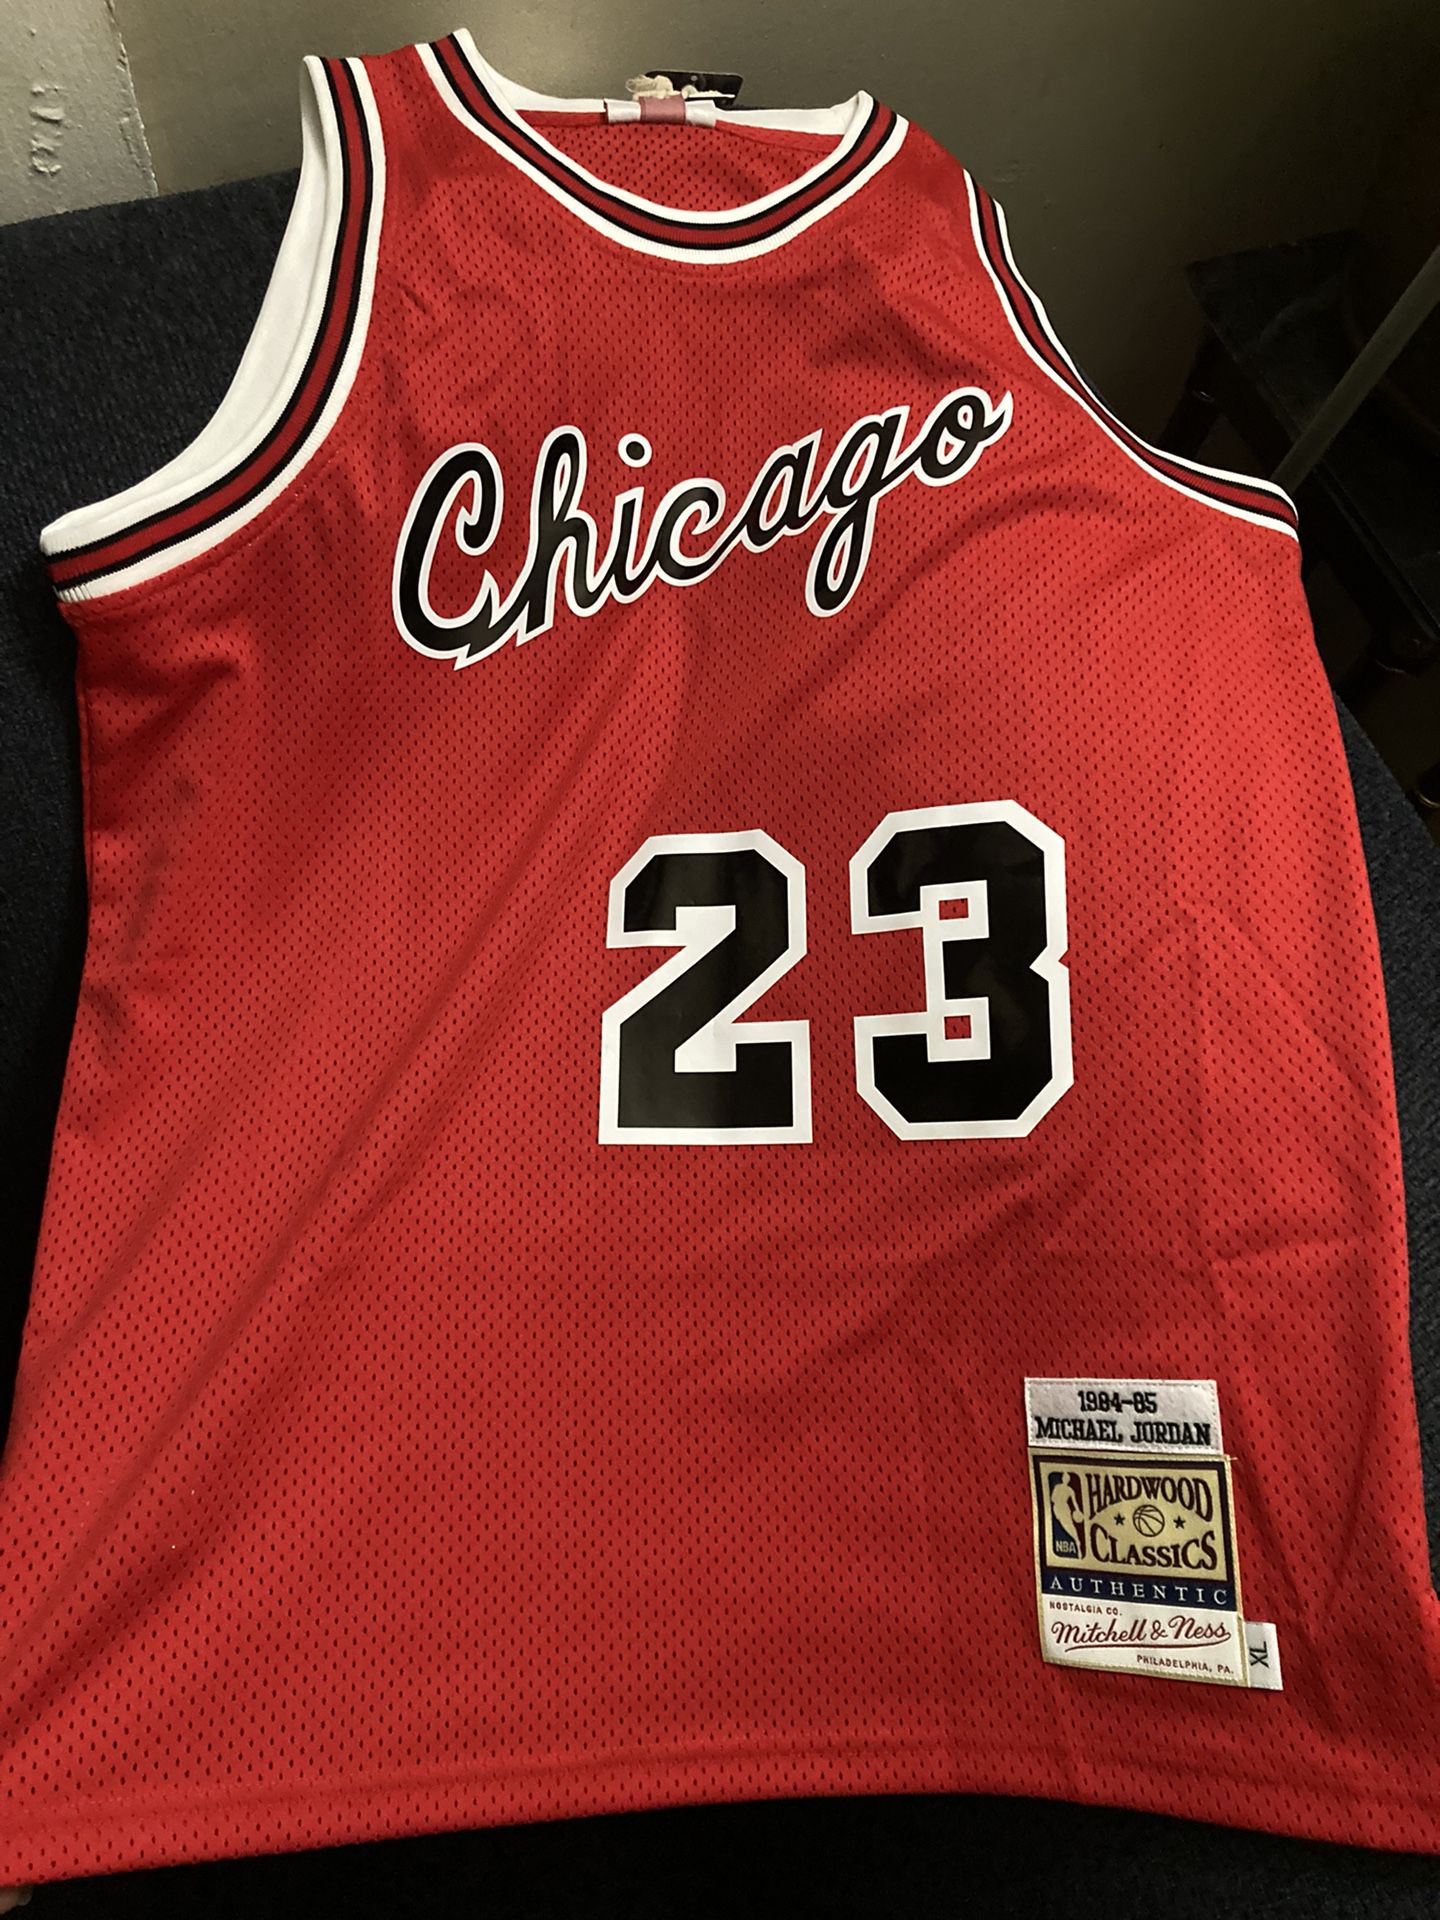 Youth Chicago Bulls Authentic Mitchell & Ness Michael Jordan 1984-85 Jersey